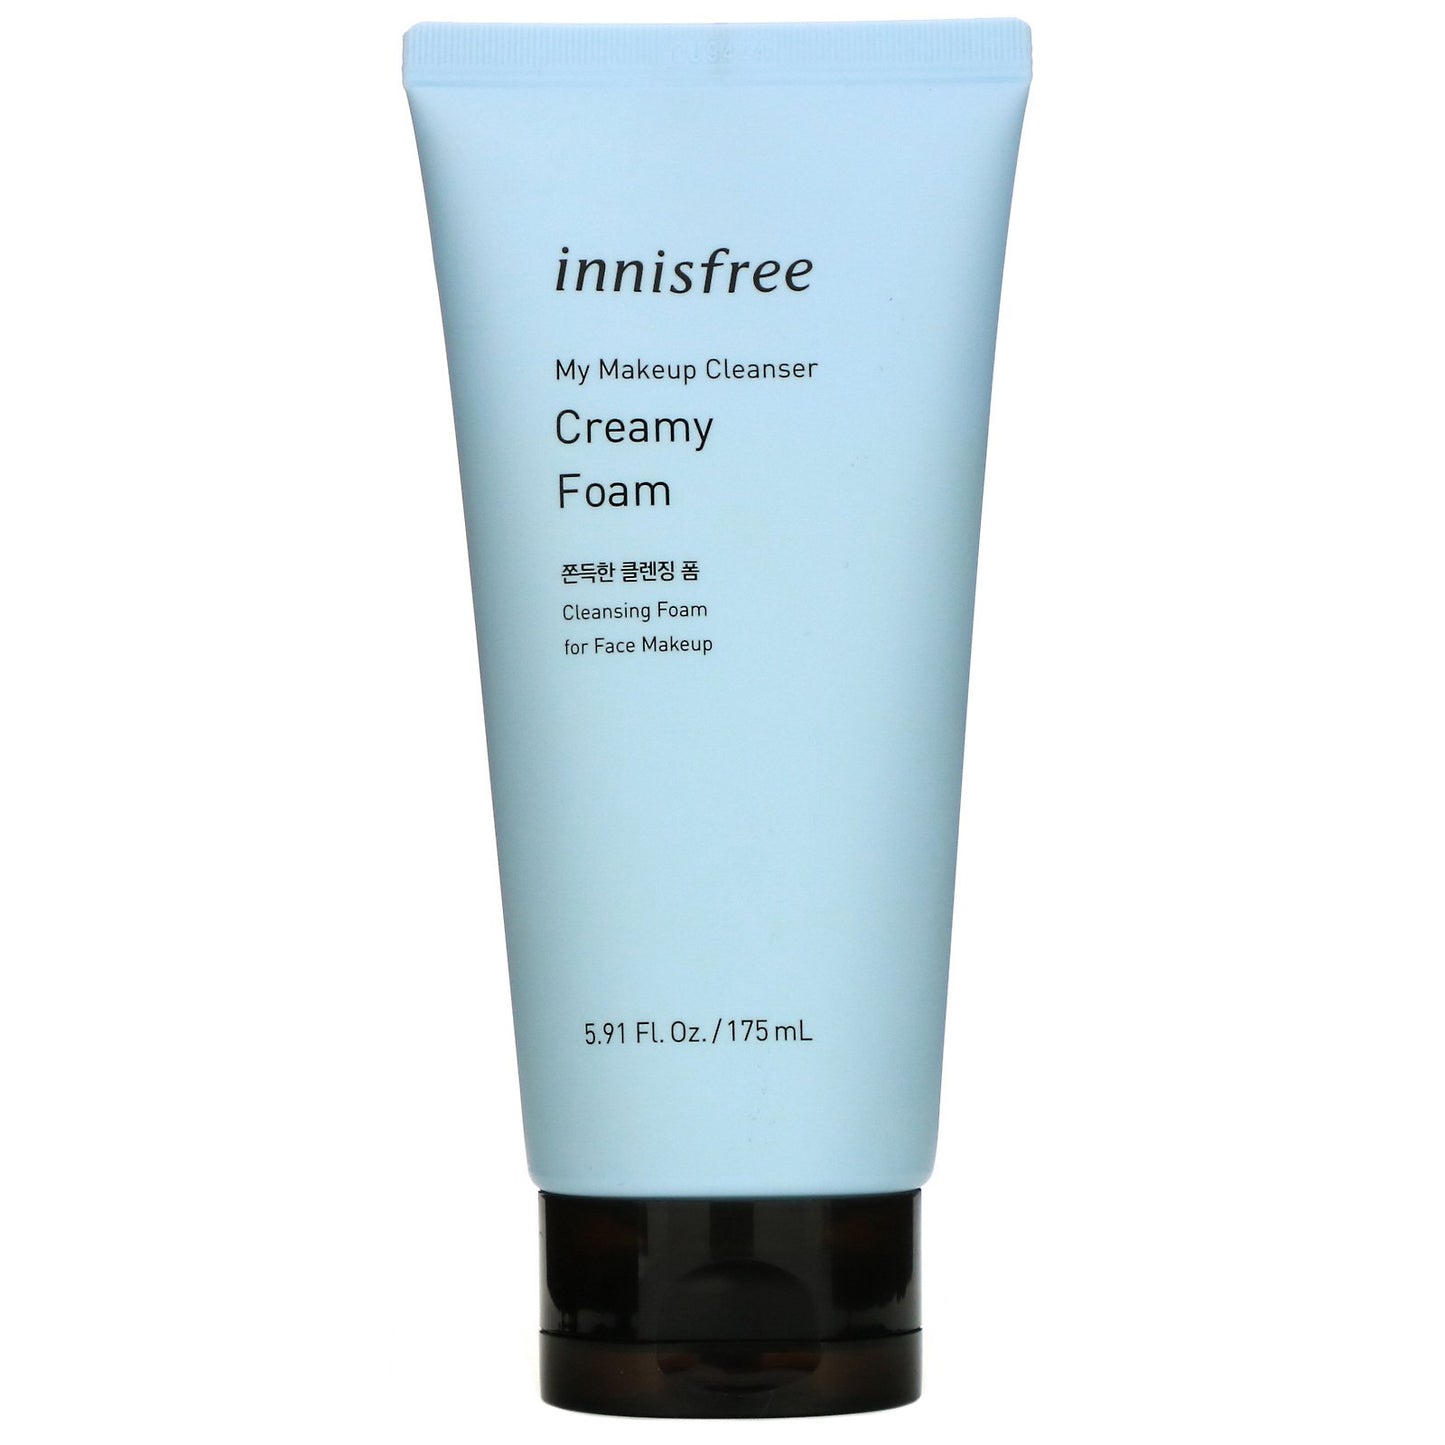 innisfree - My Makeup Cleanser - Creamy Foam 175mL